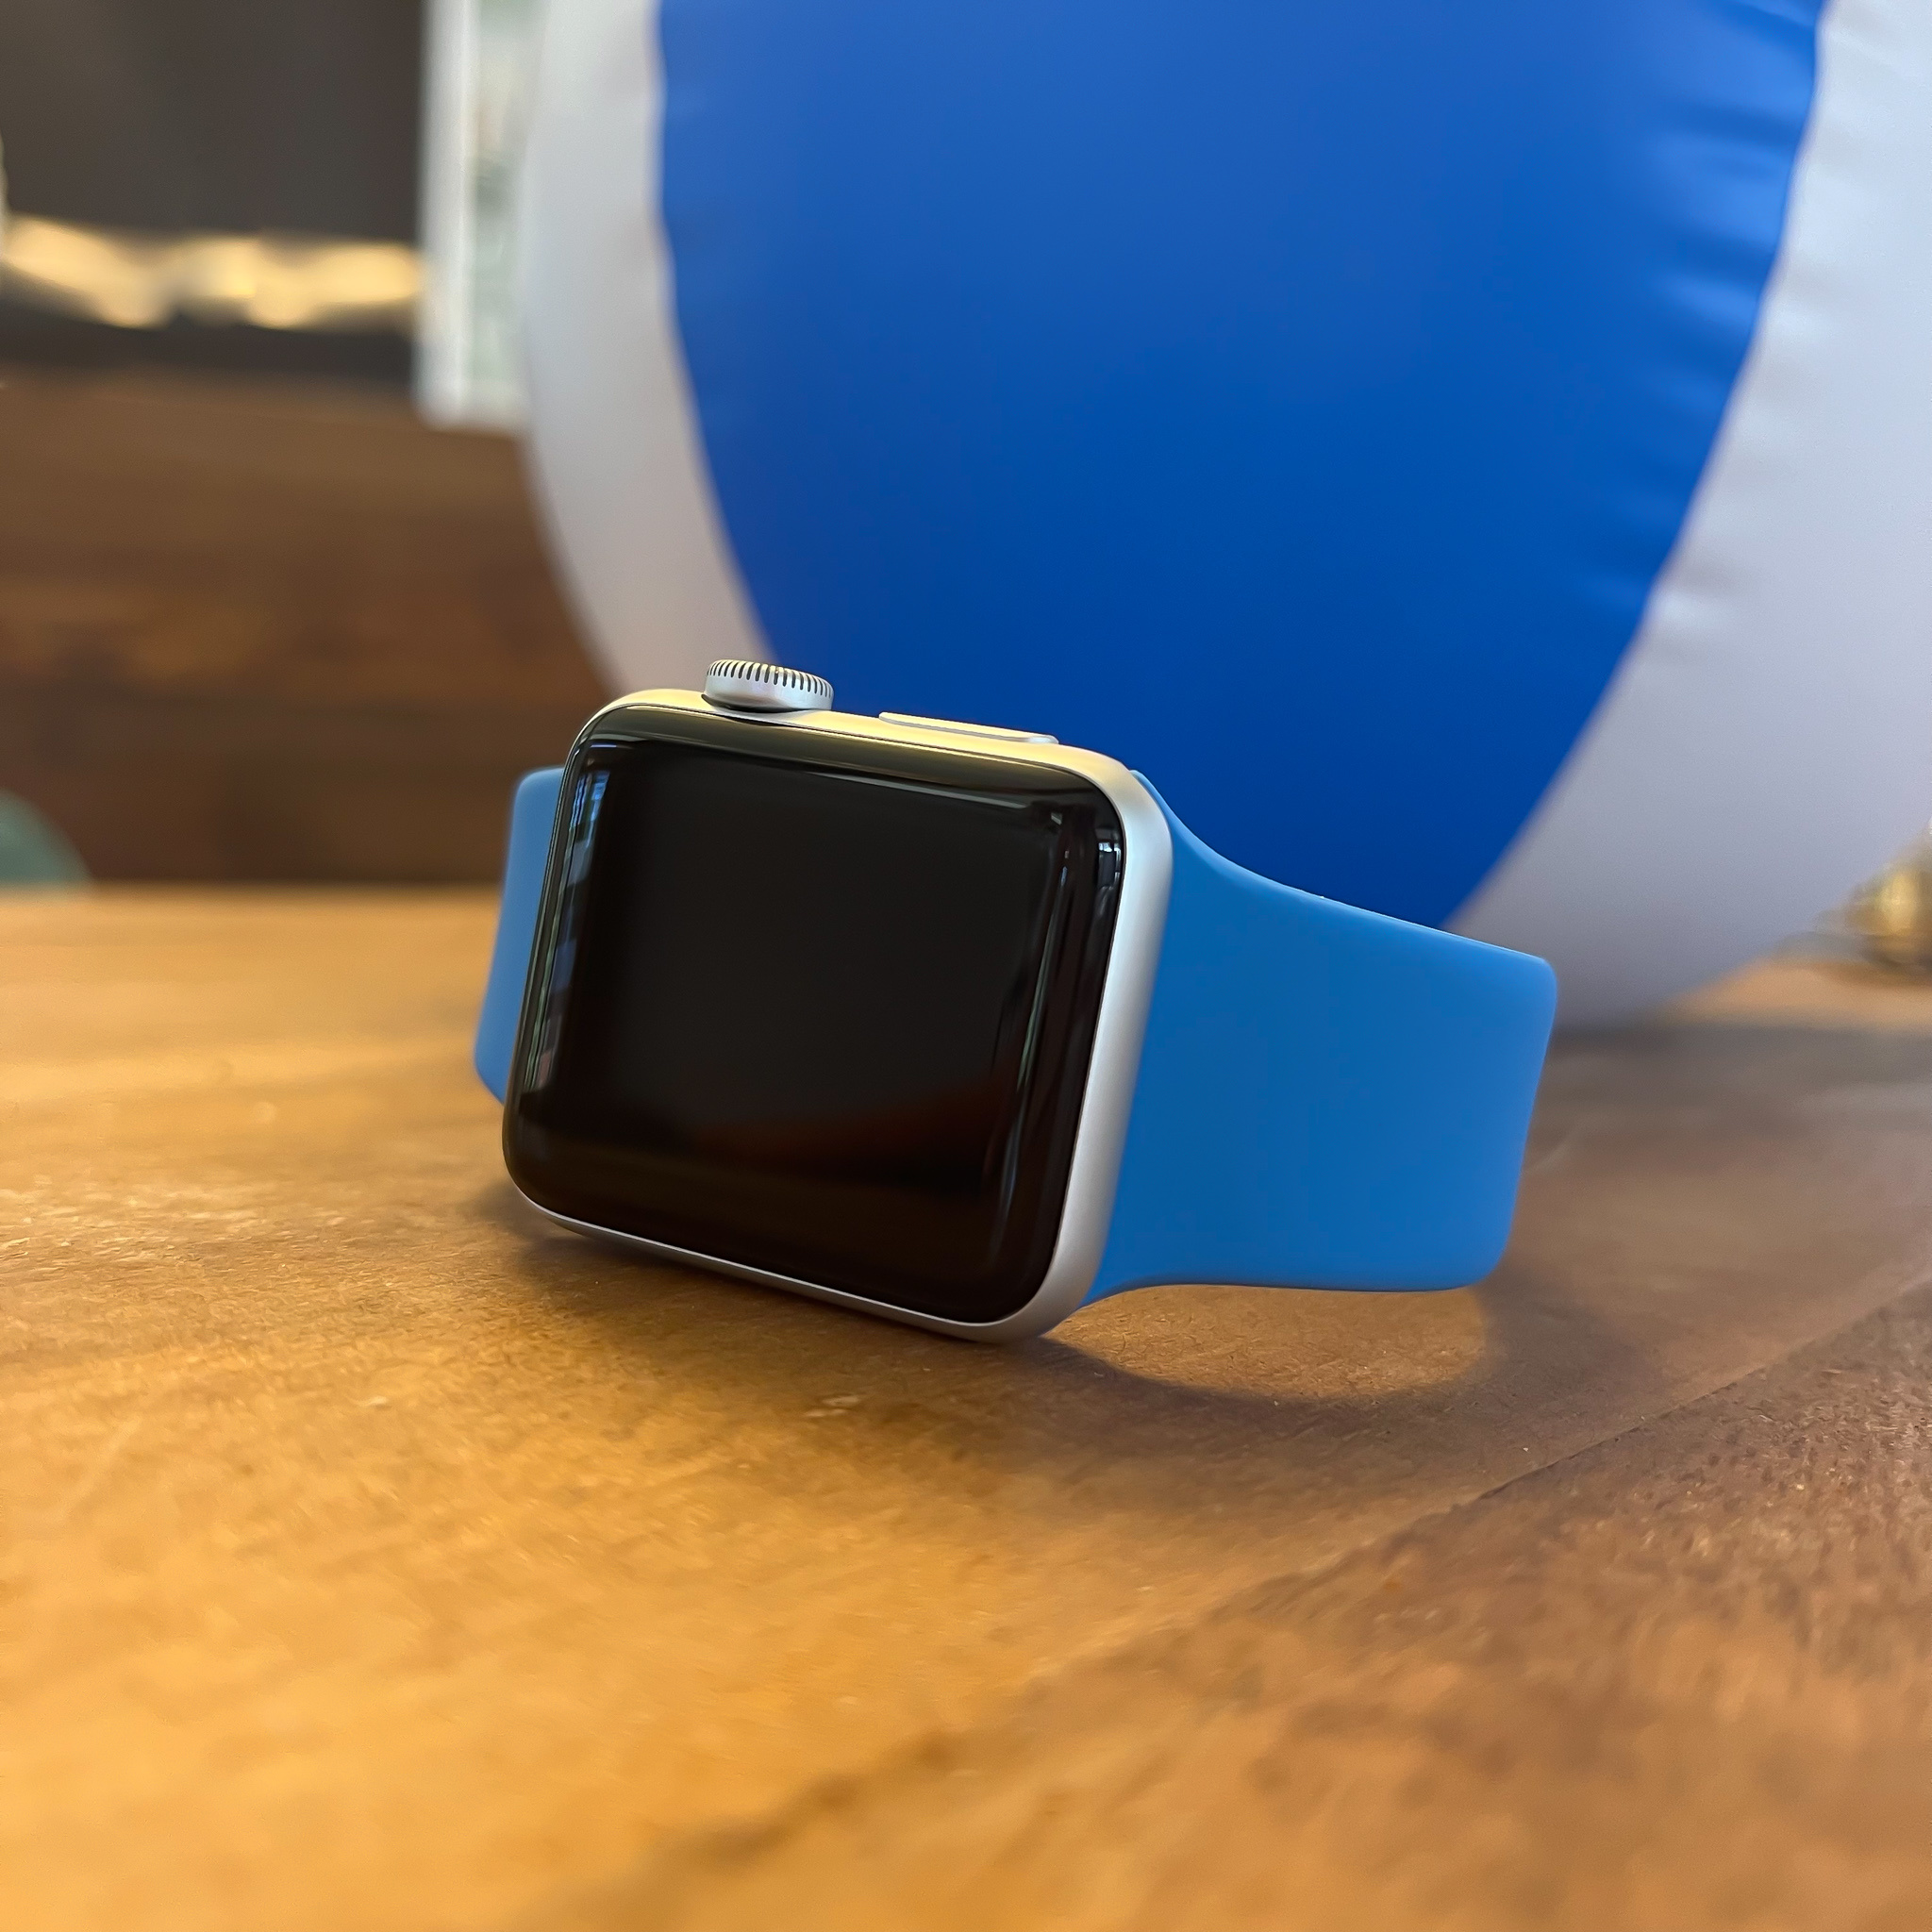 Cinturino sport per Apple Watch - blu surf